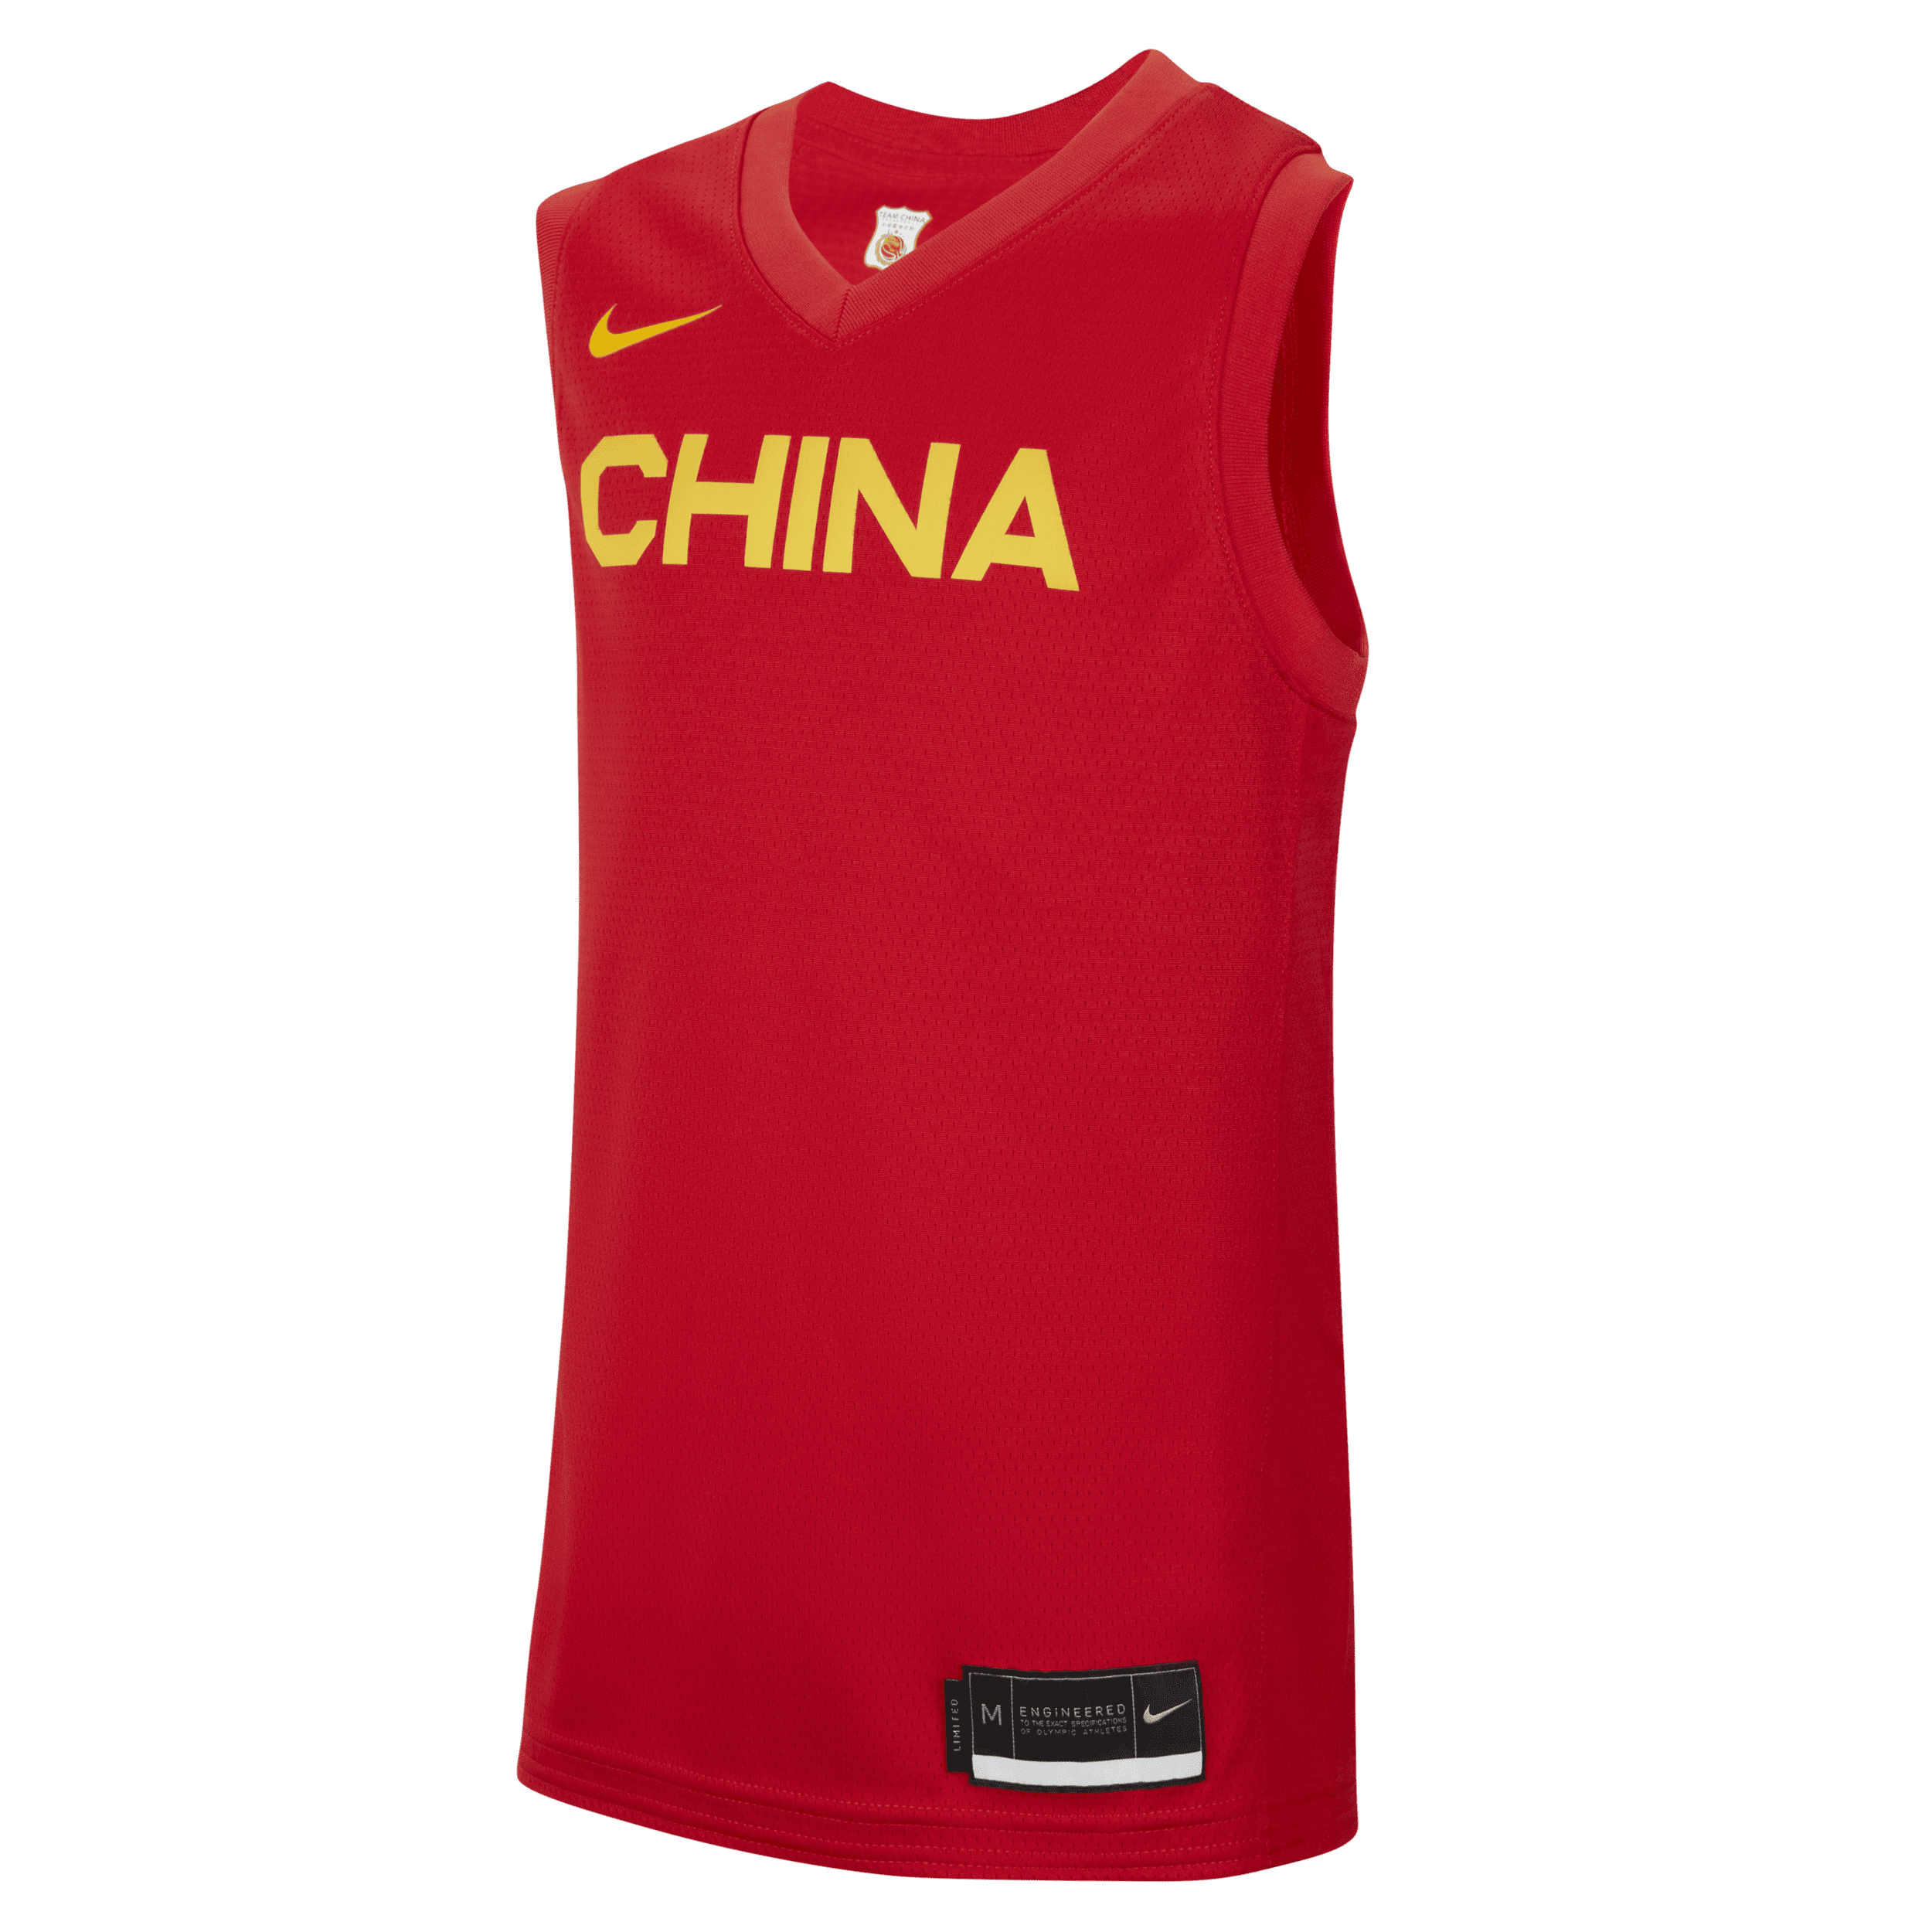 Kina (Road) Nike-basketballtrøje til større børn - rød